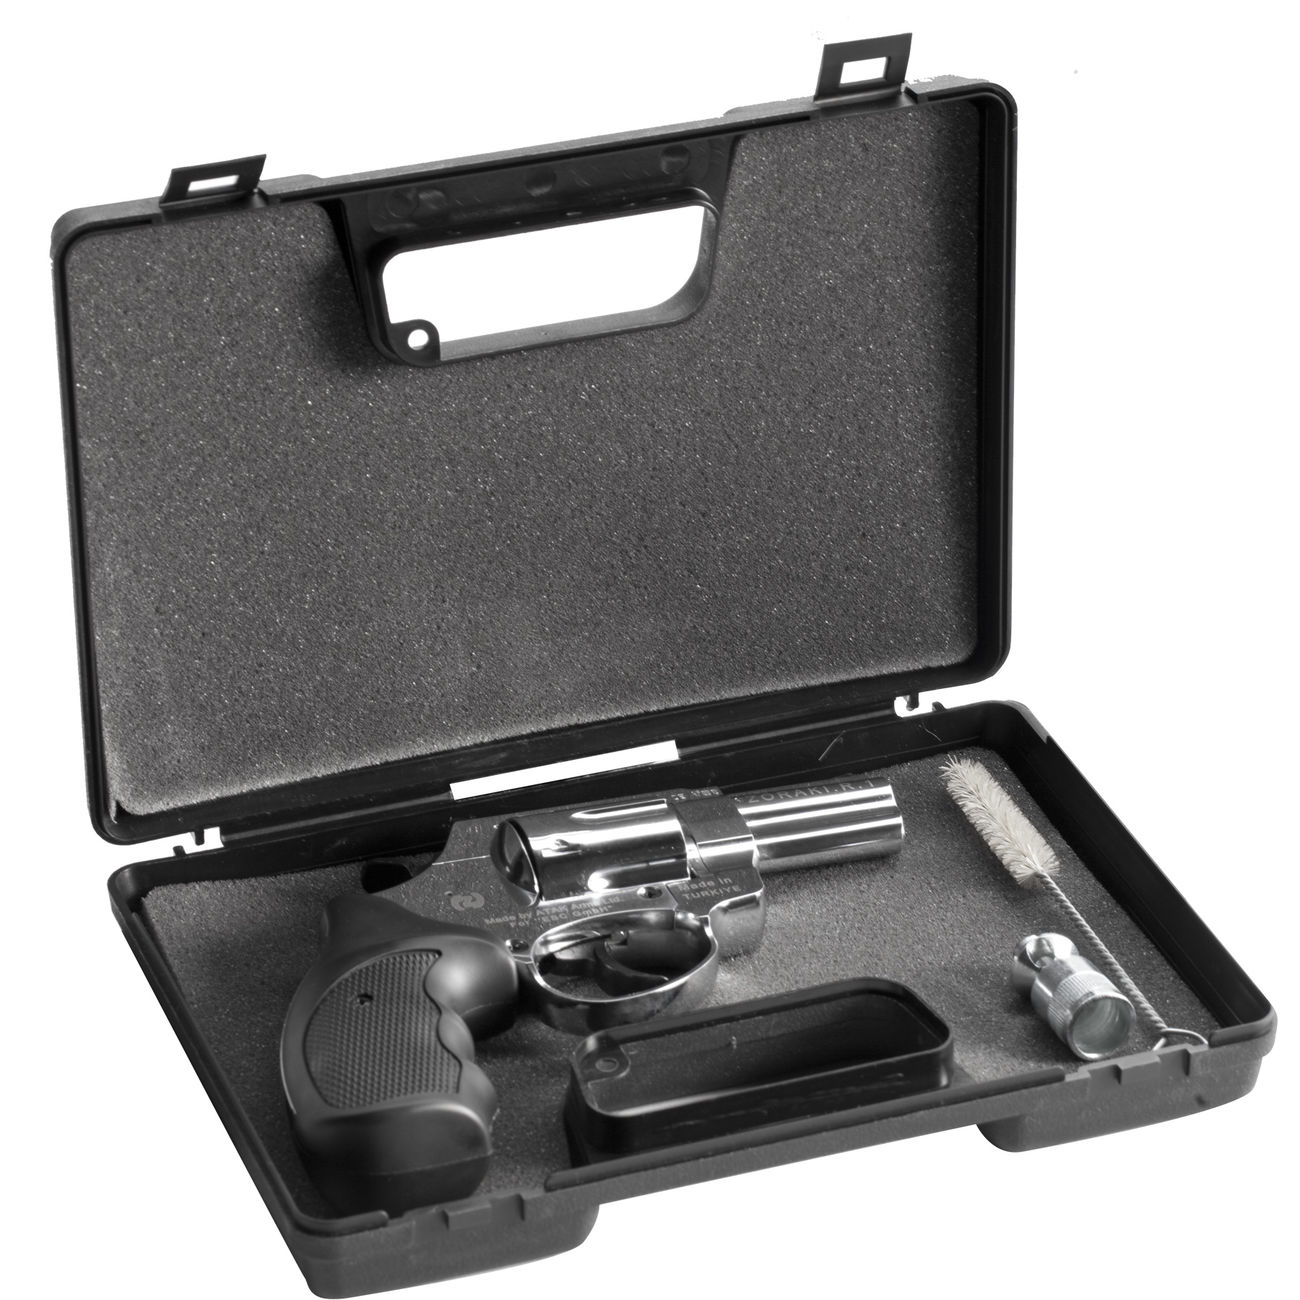 Zoraki R1 2,5 Zoll Schreckschuss-Revolver Kal. 9mm R.K. chrom Bild 1